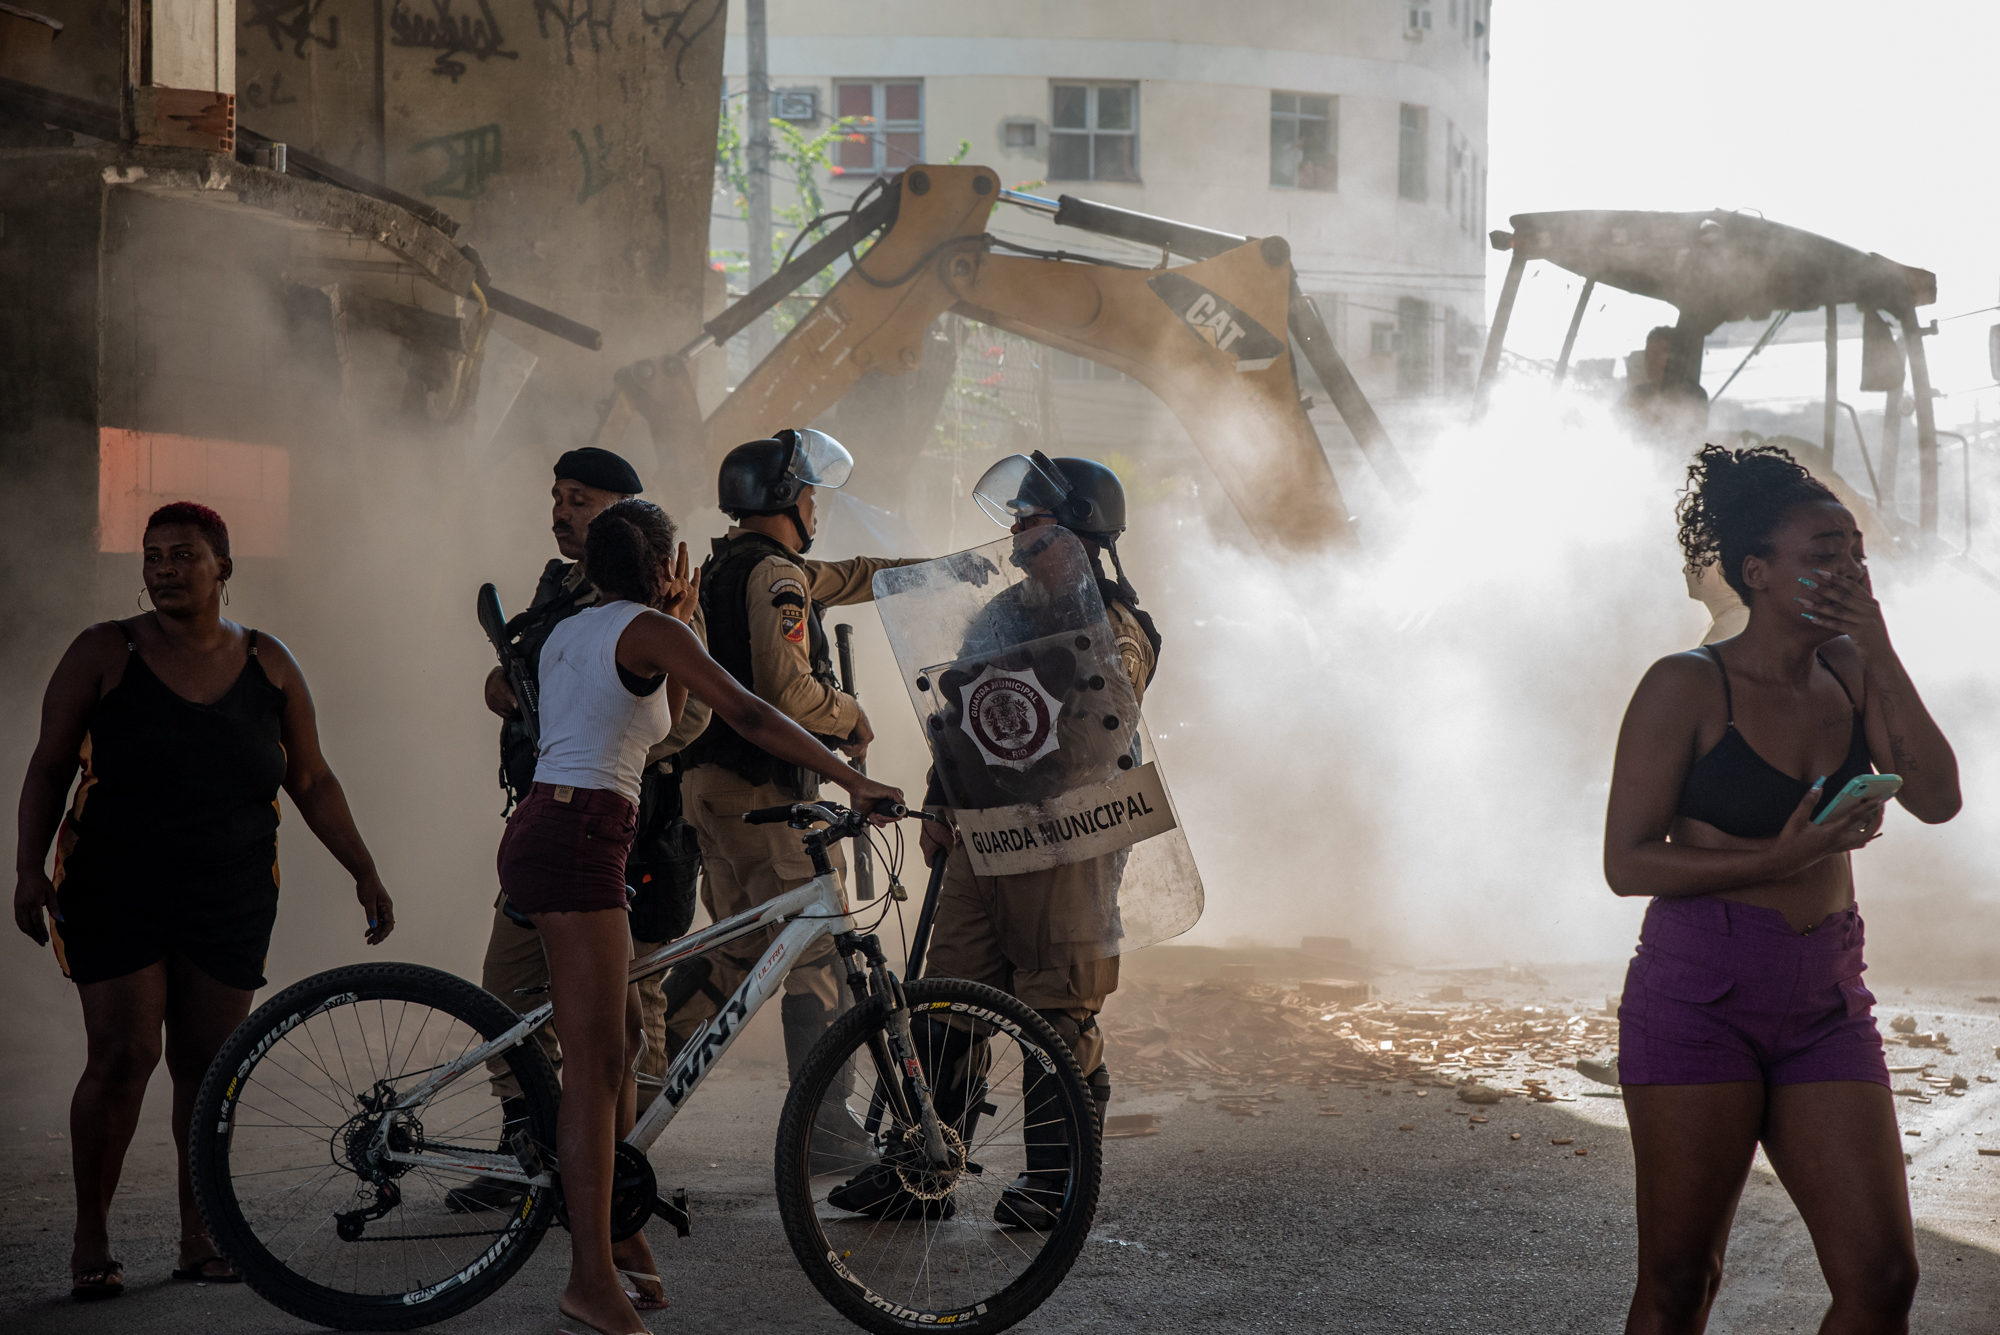 A resident in despair following the demolition of businesses in the Rato Molhado favela. Photo: Bárbara Dias